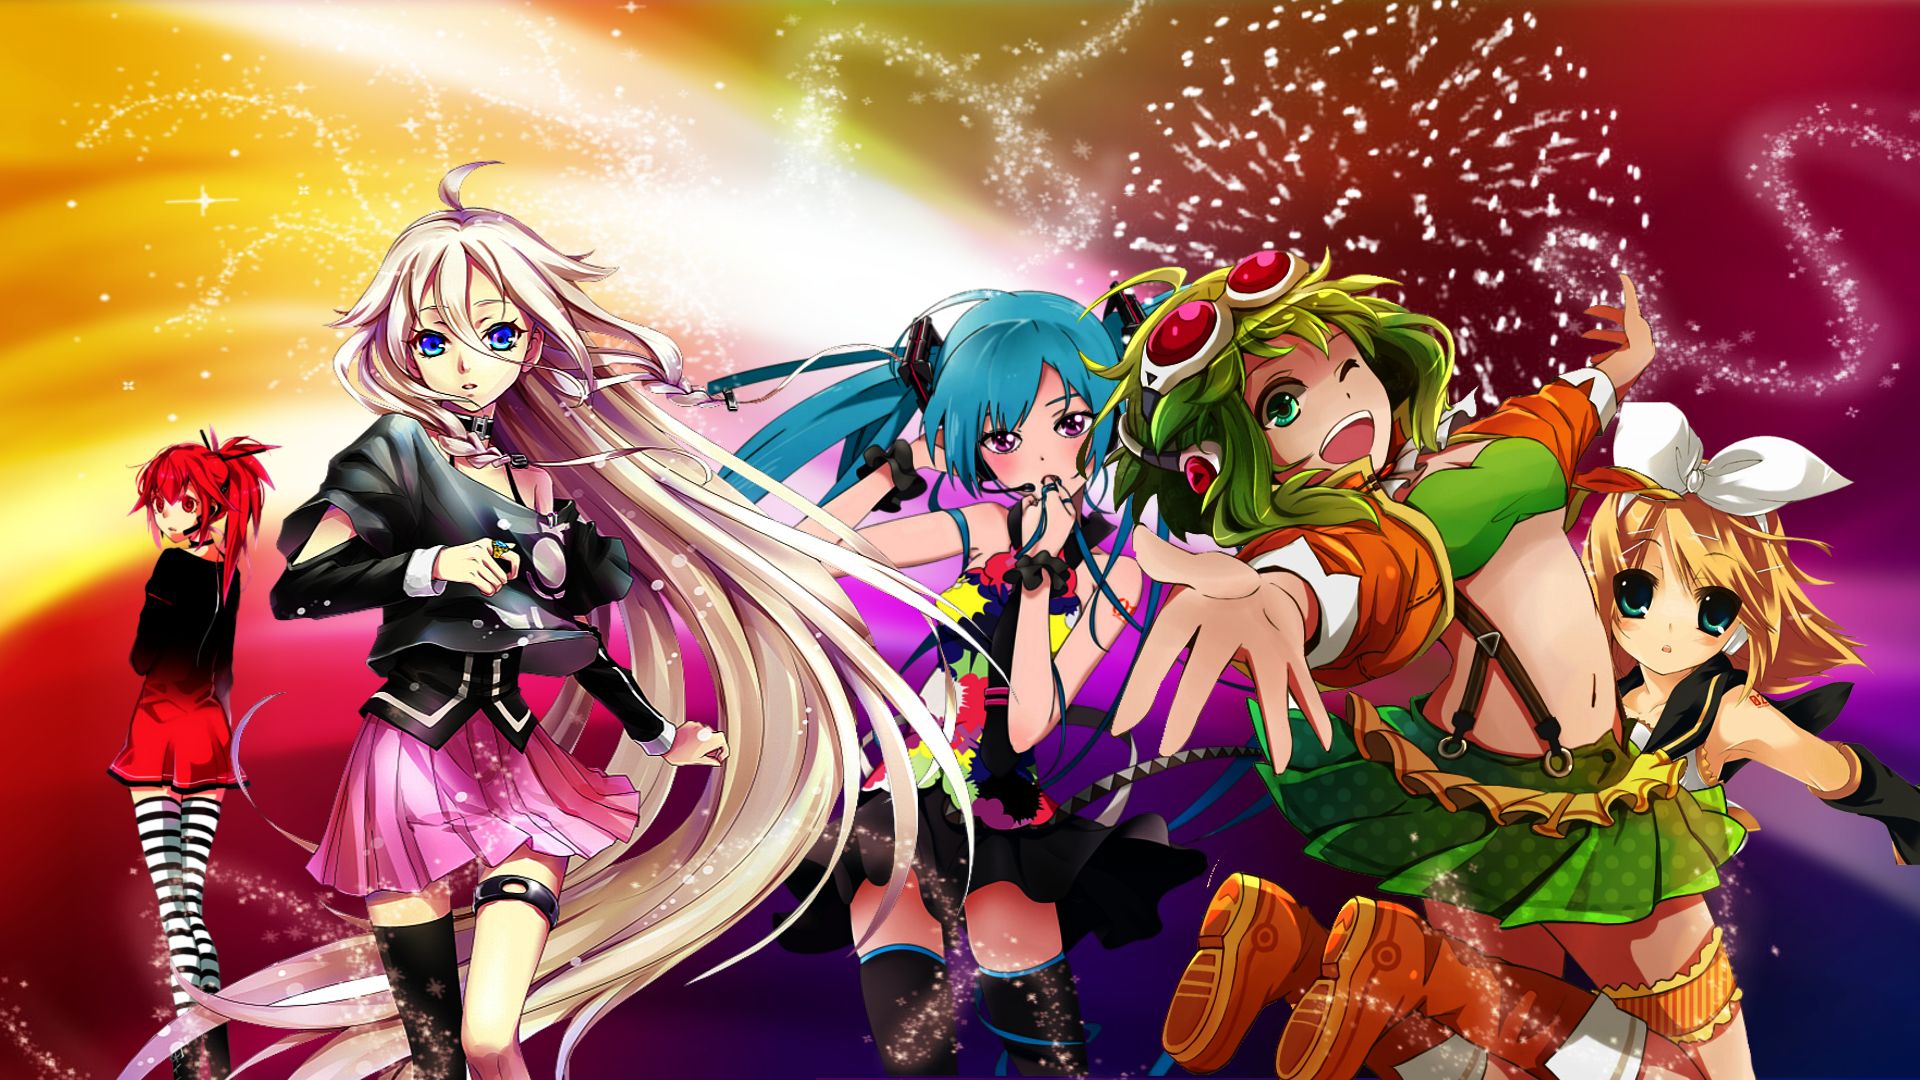 Descarga gratis la imagen Vocaloid, Animado, Hatsune Miku, Rin Kagamine, Gumi (Vocaloid), Ai (Vocaloid) en el escritorio de tu PC